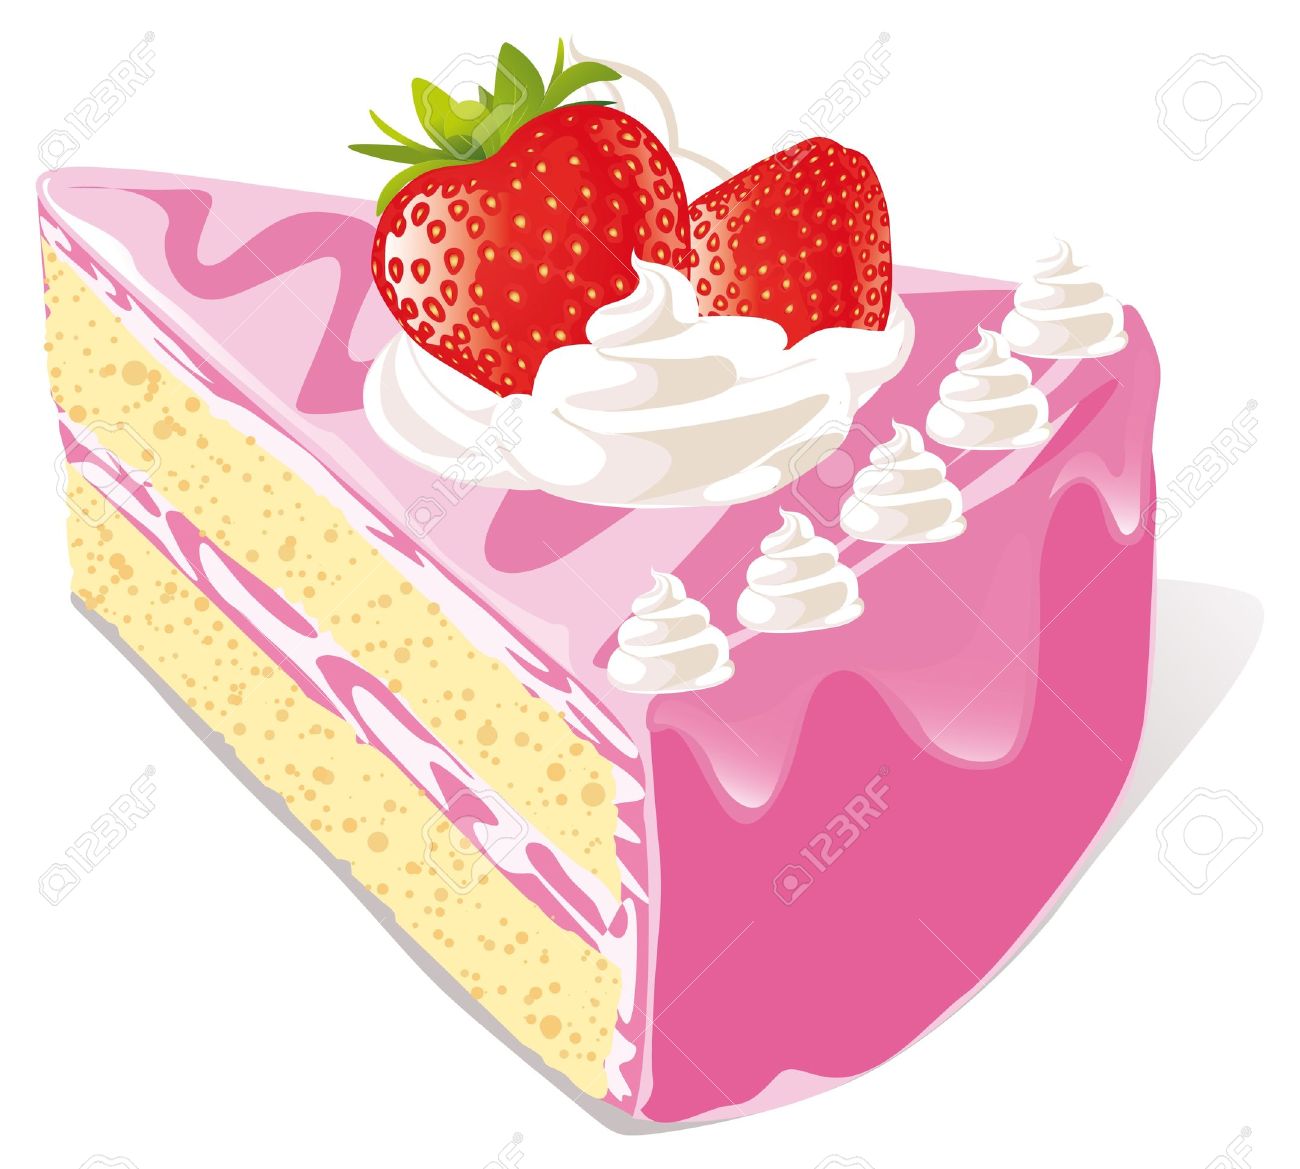 piece of cake: strawberry cake